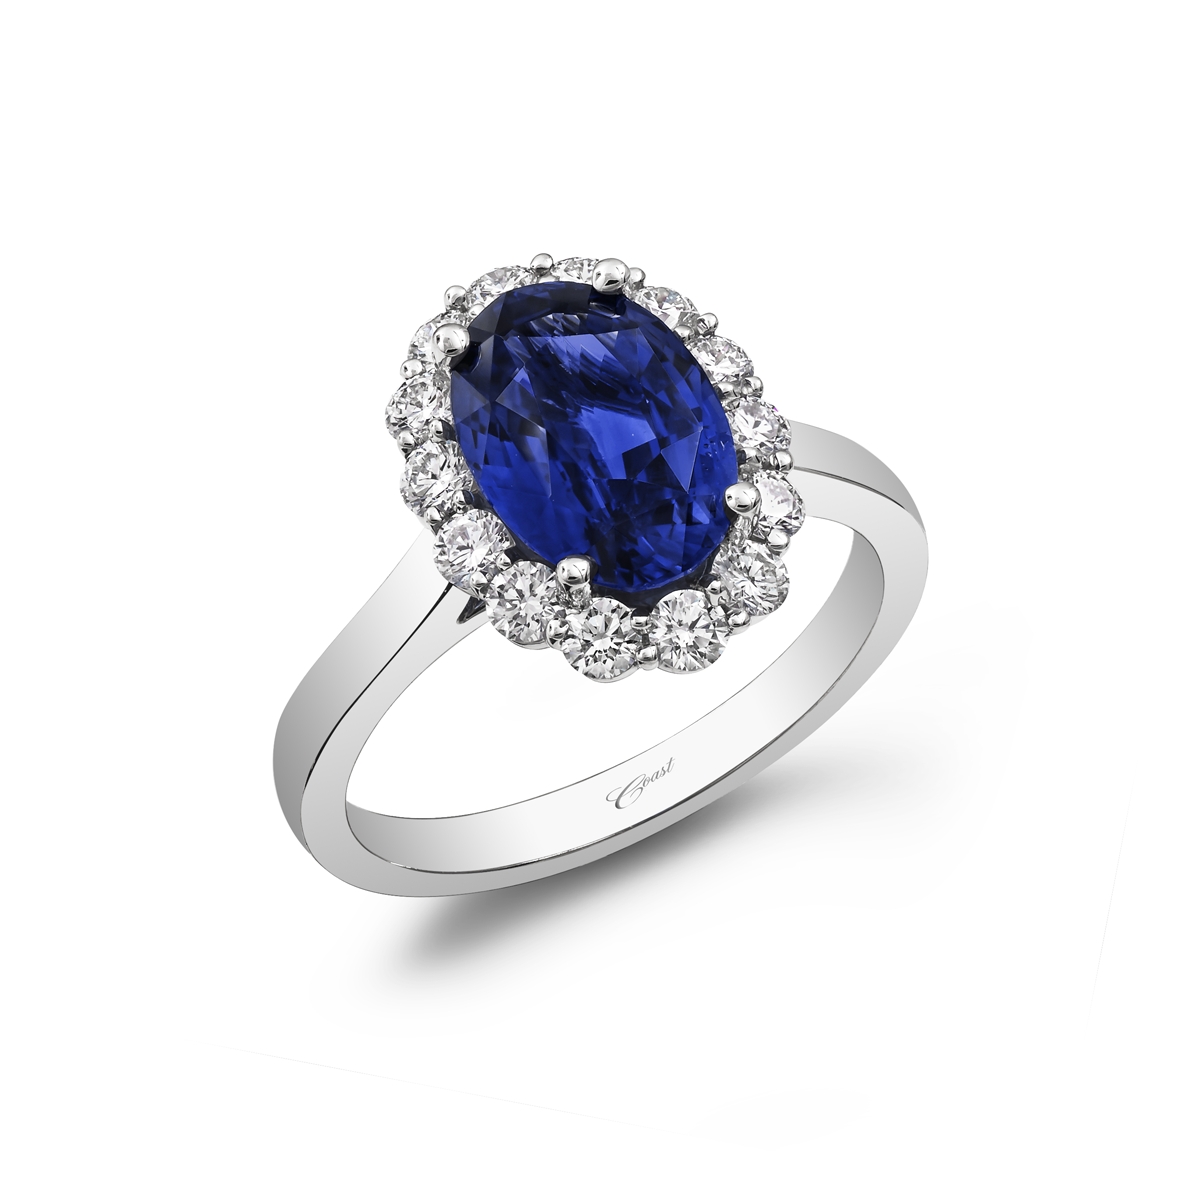 Colored Gemstones Look the Best Set in Platinum - Engagement 101